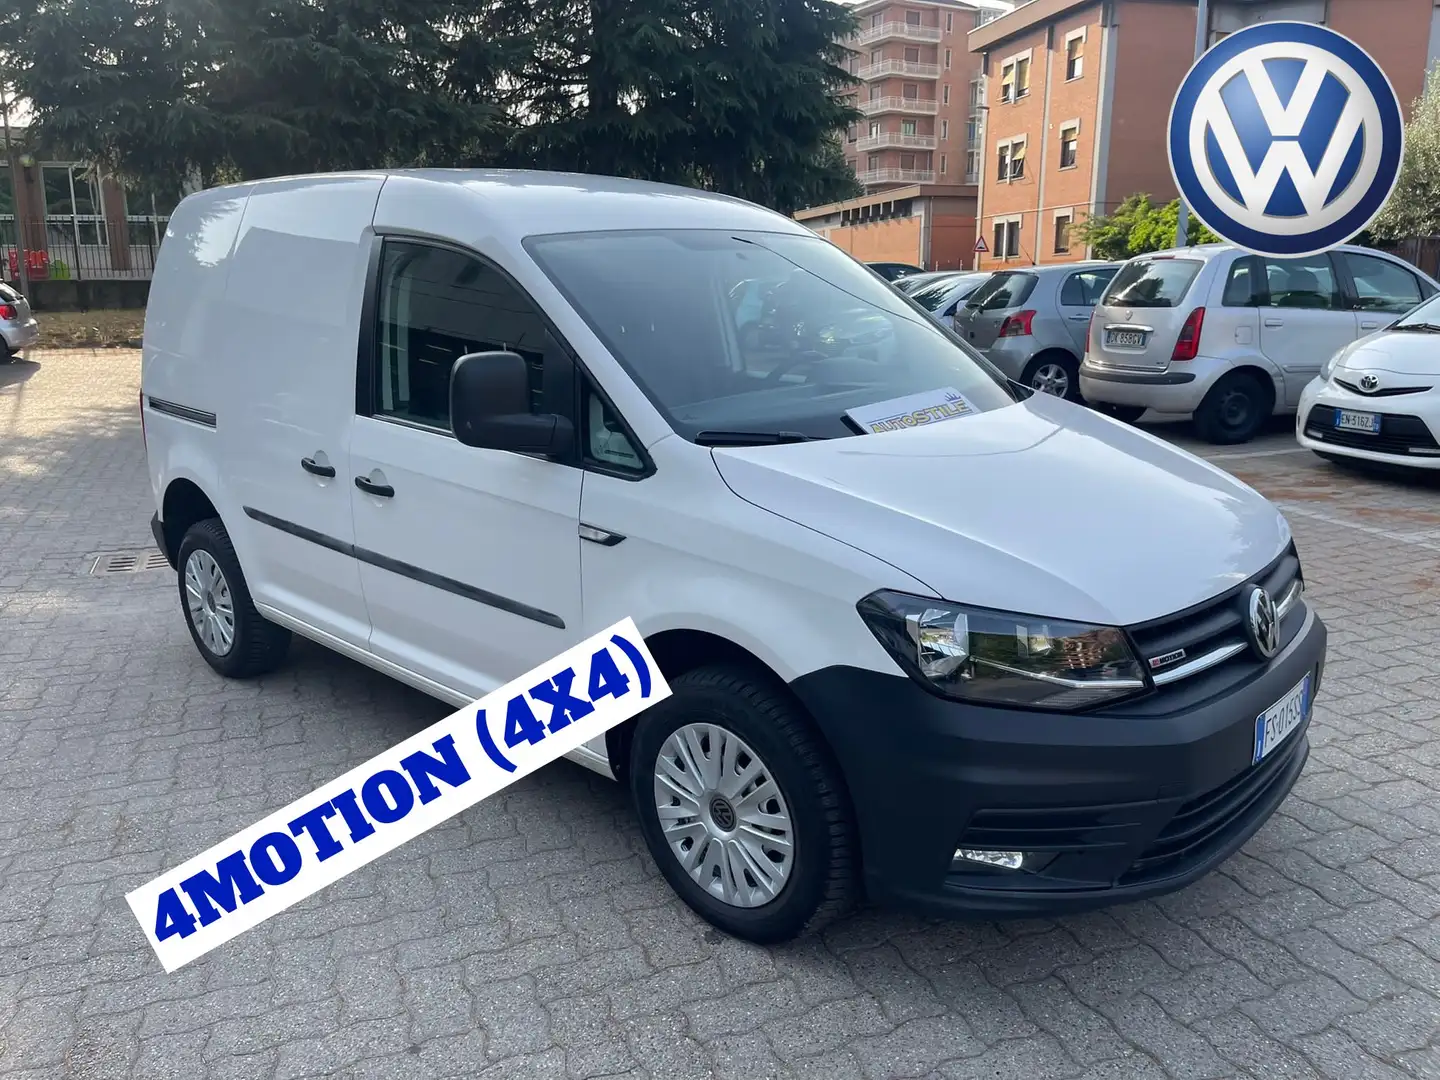 usato Volkswagen Caddy Furgoni/Van a Torino - To per € 17.966,-